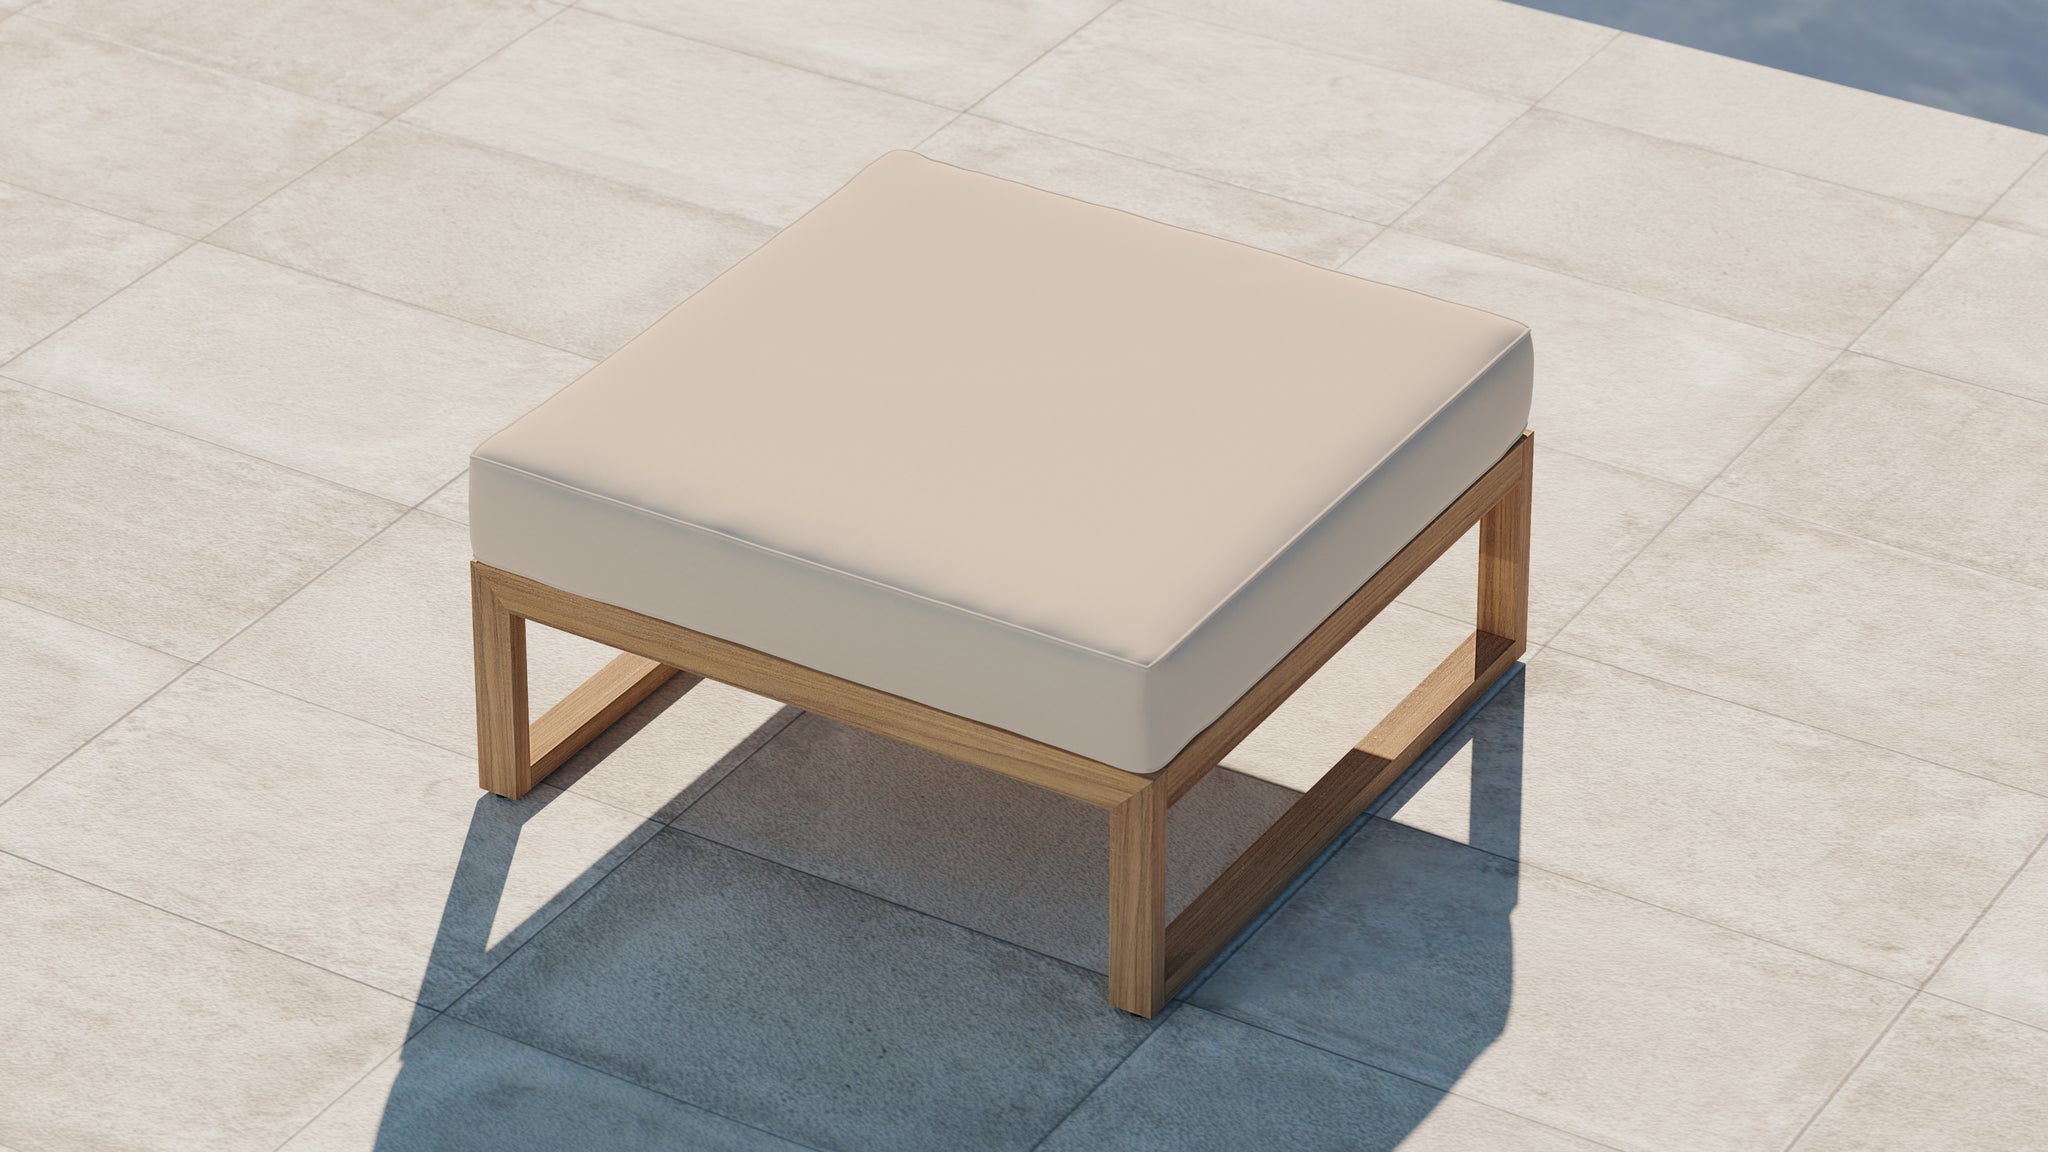 The Buckingham Teak Outdoor Lounge Furniture Footstool with Ecru Cushion